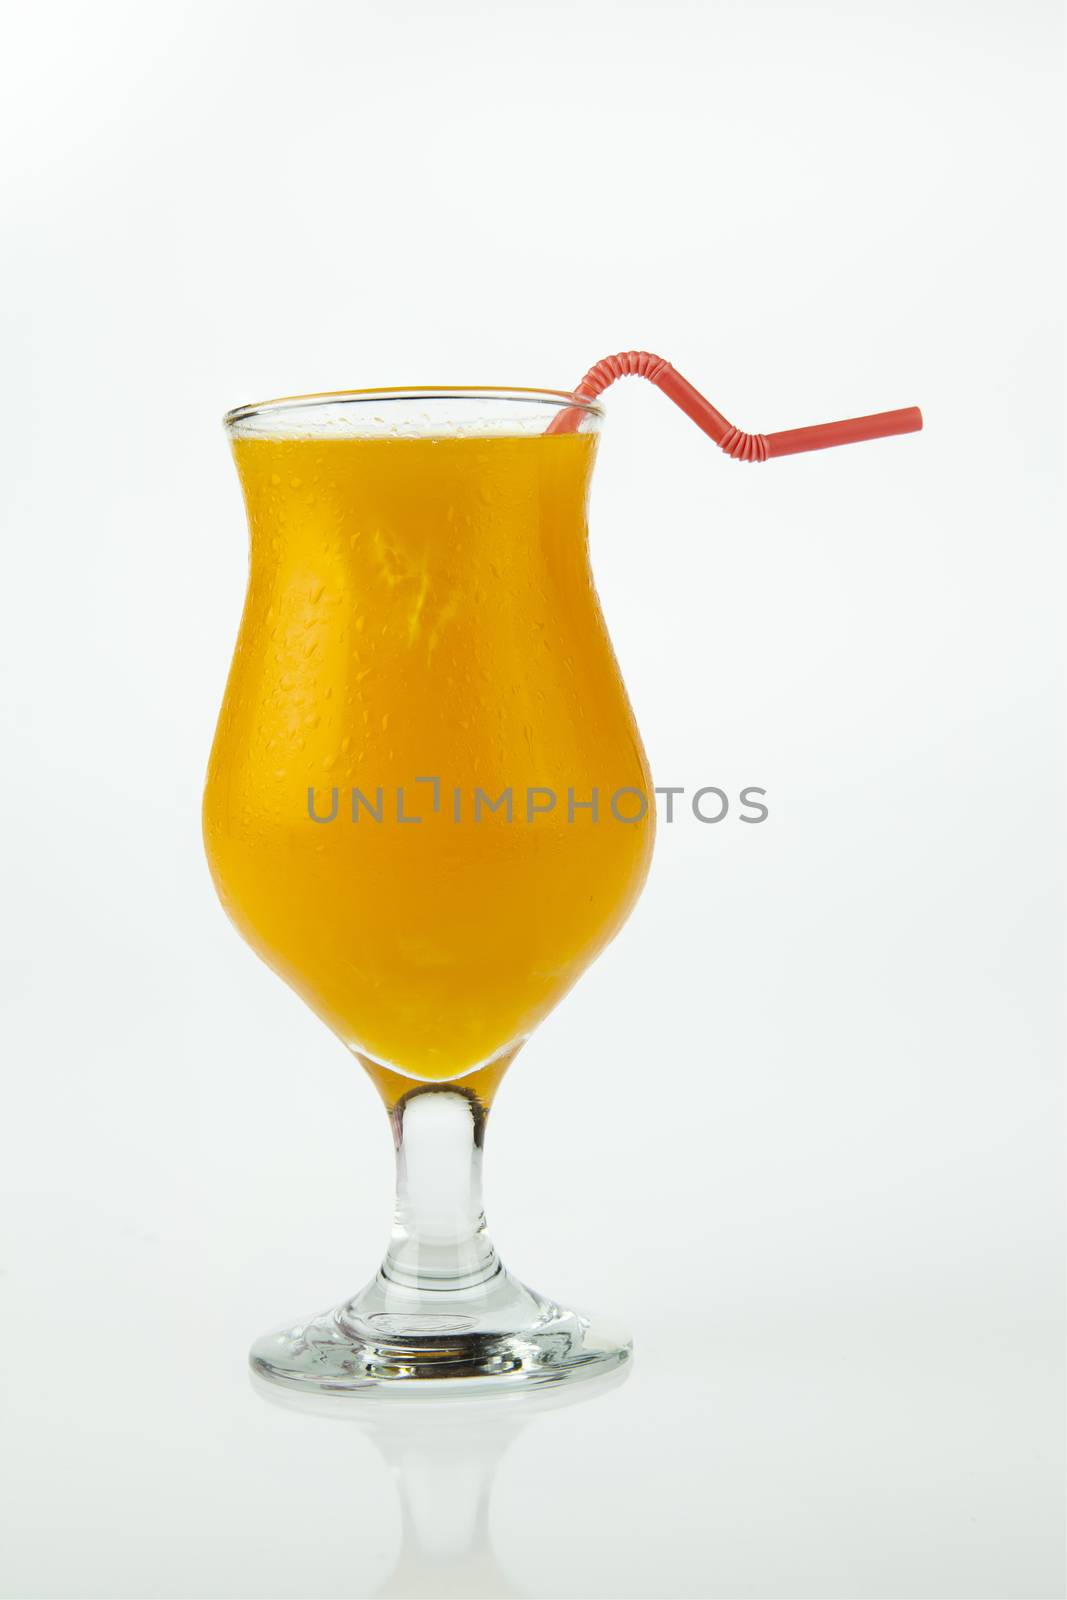 glasses of orange juice by Chattranusorn09